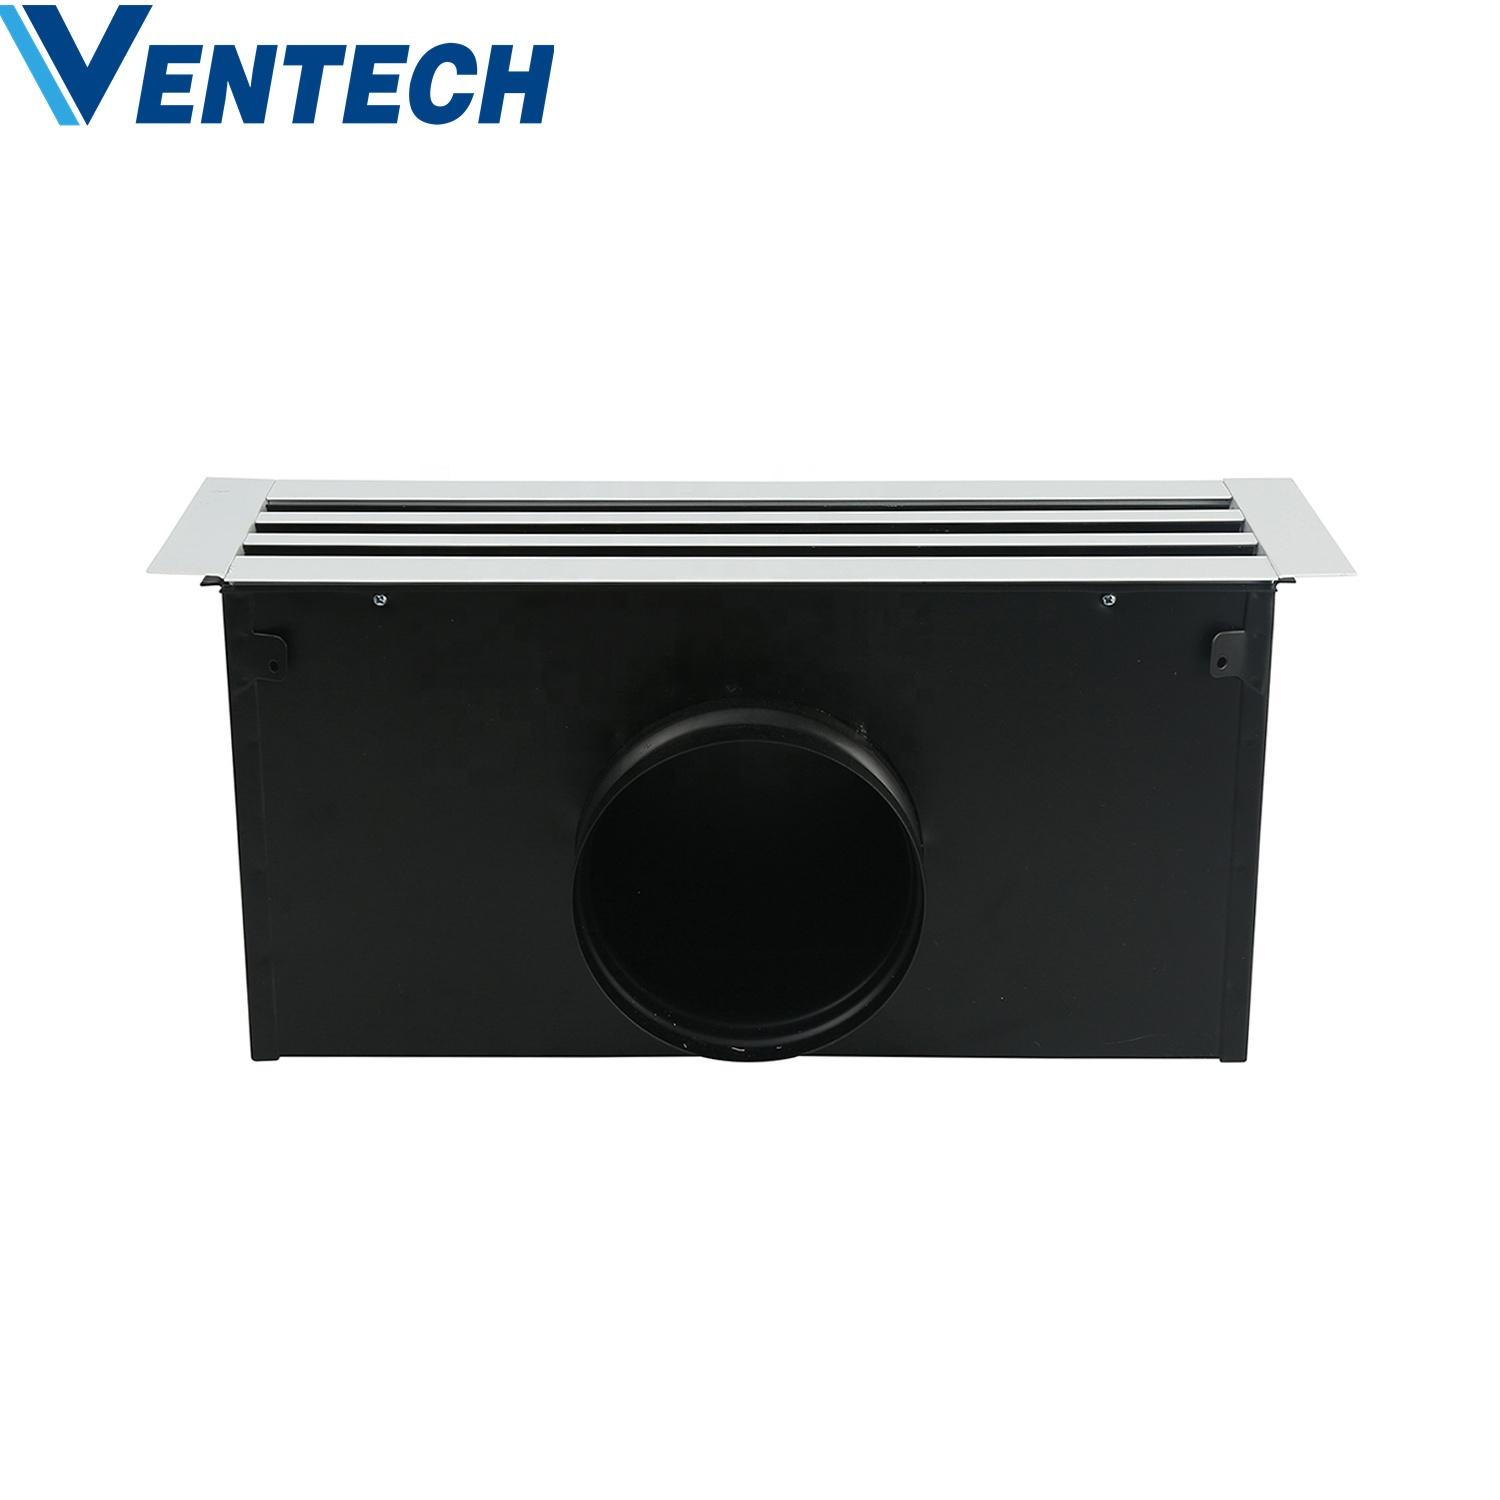 Hvac ducting mounted ventilation fresh air size customized plenum box supply air linear slot diffuser